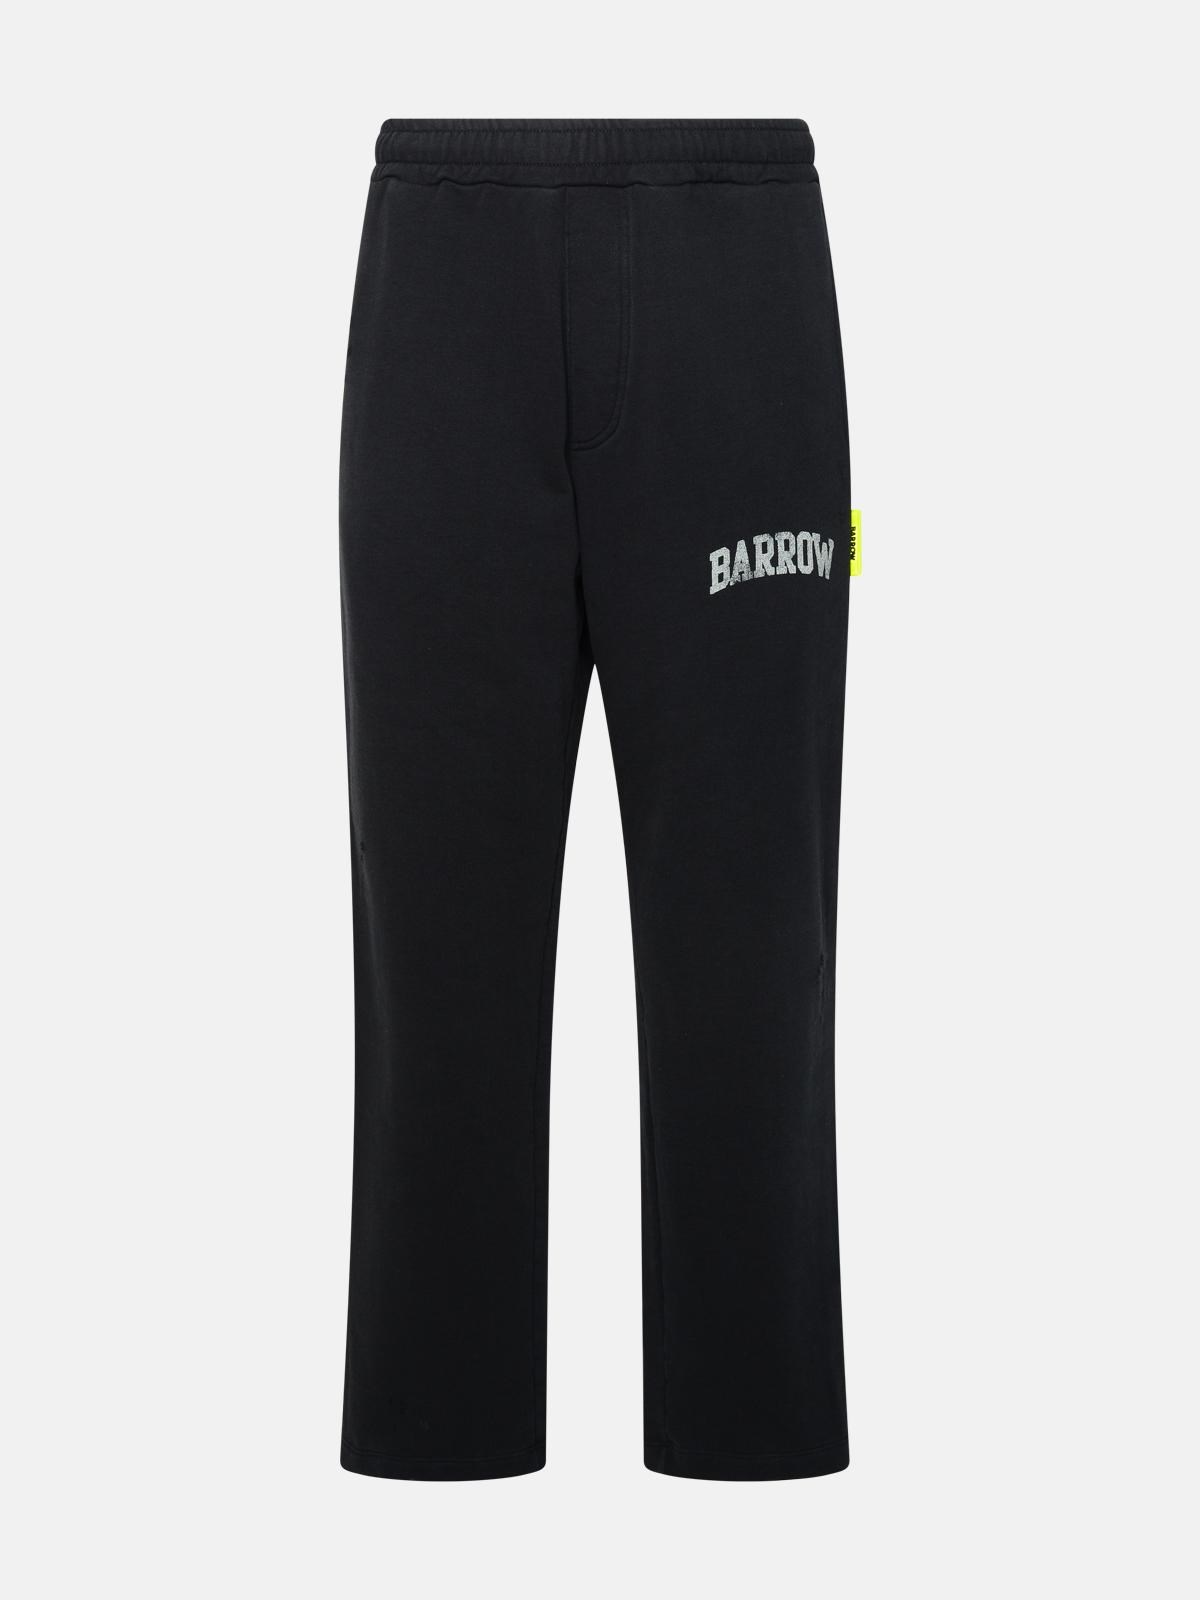 Barrow Black Cotton Track Pants